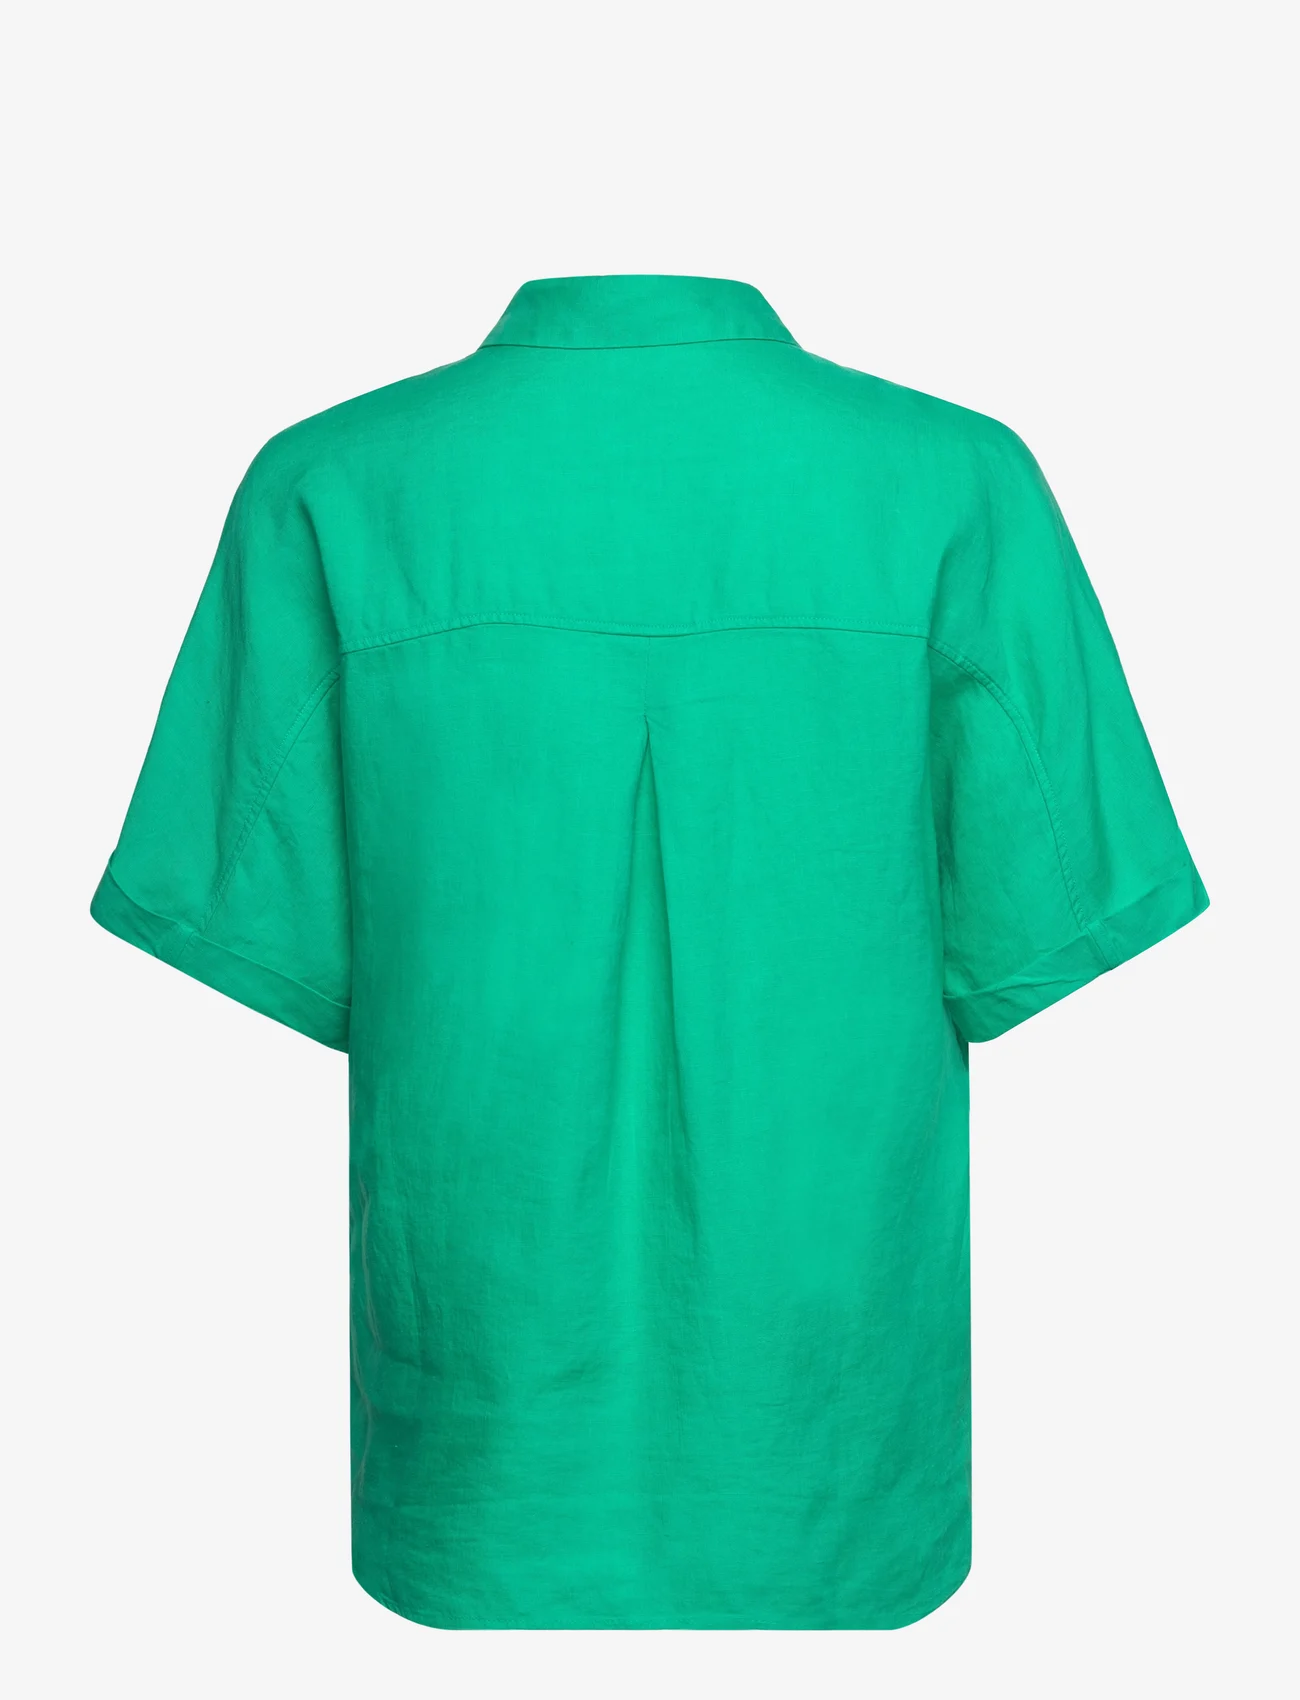 Mango - Pocket linen shirt - linskjorter - green - 1